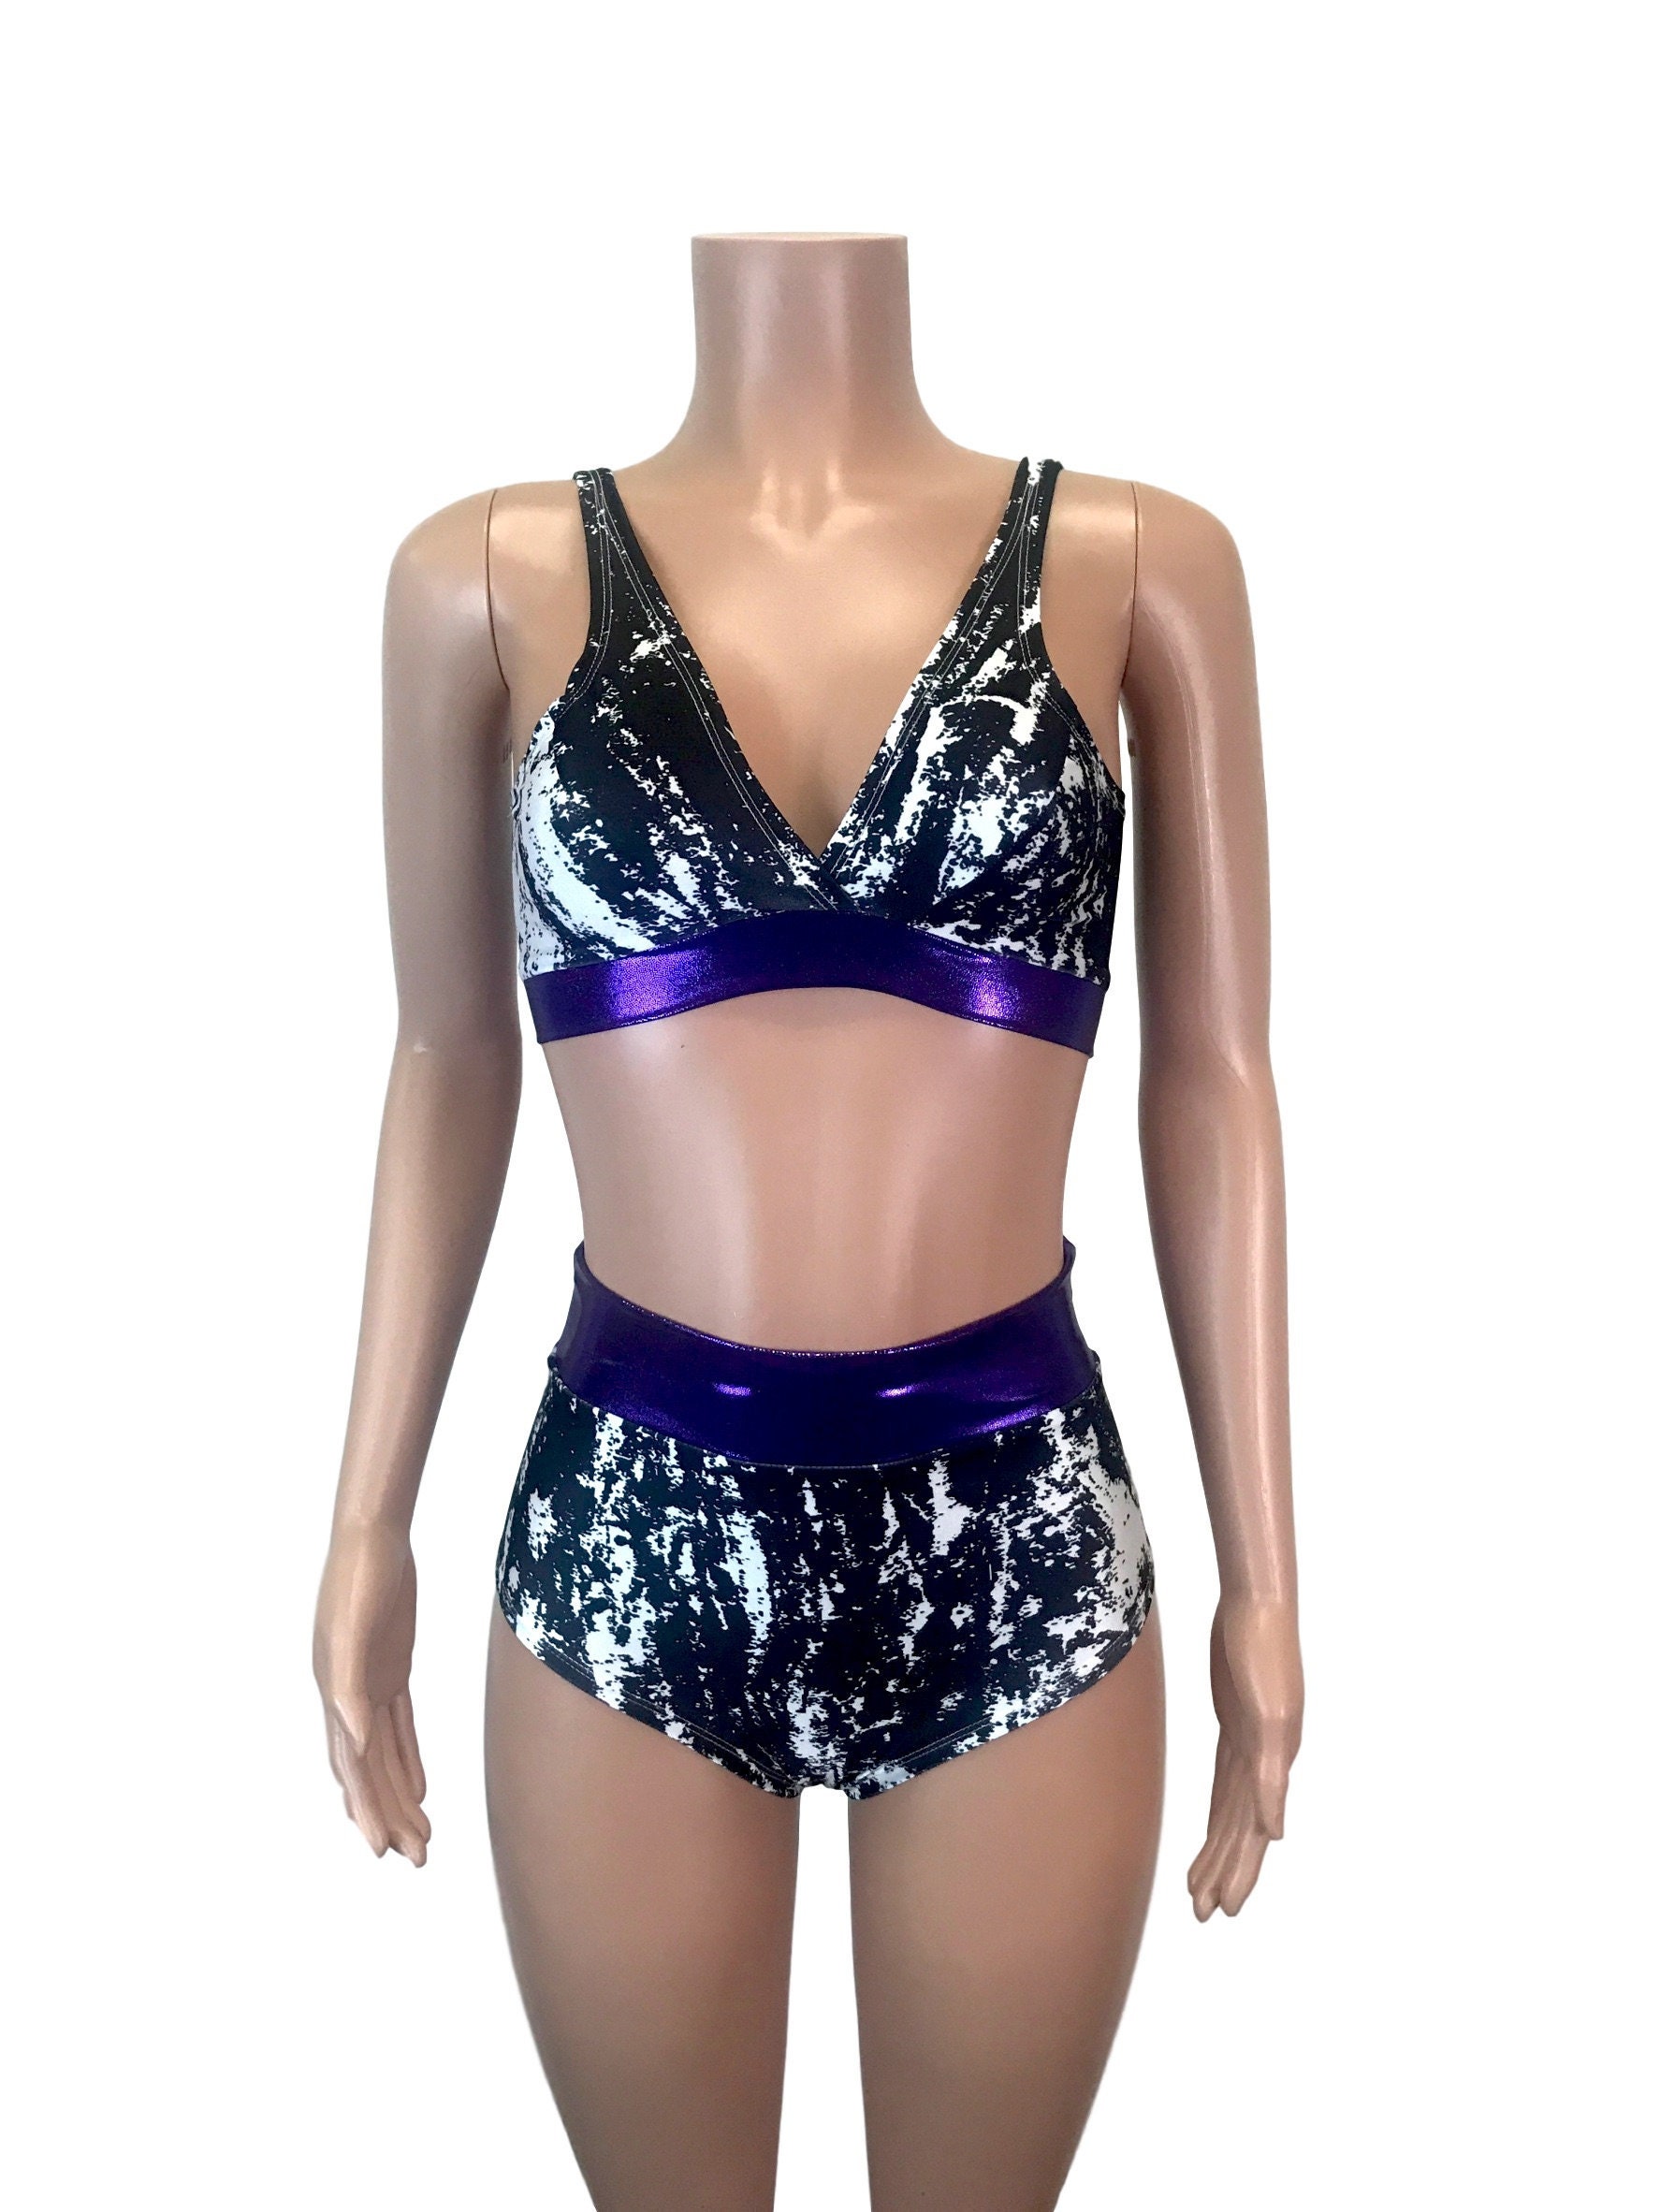 Black, White & Purple Spandex High Waist Bikini Rave Outfit Bikini,  Activewear, Festival Outfit, Bathing Suit -  New Zealand